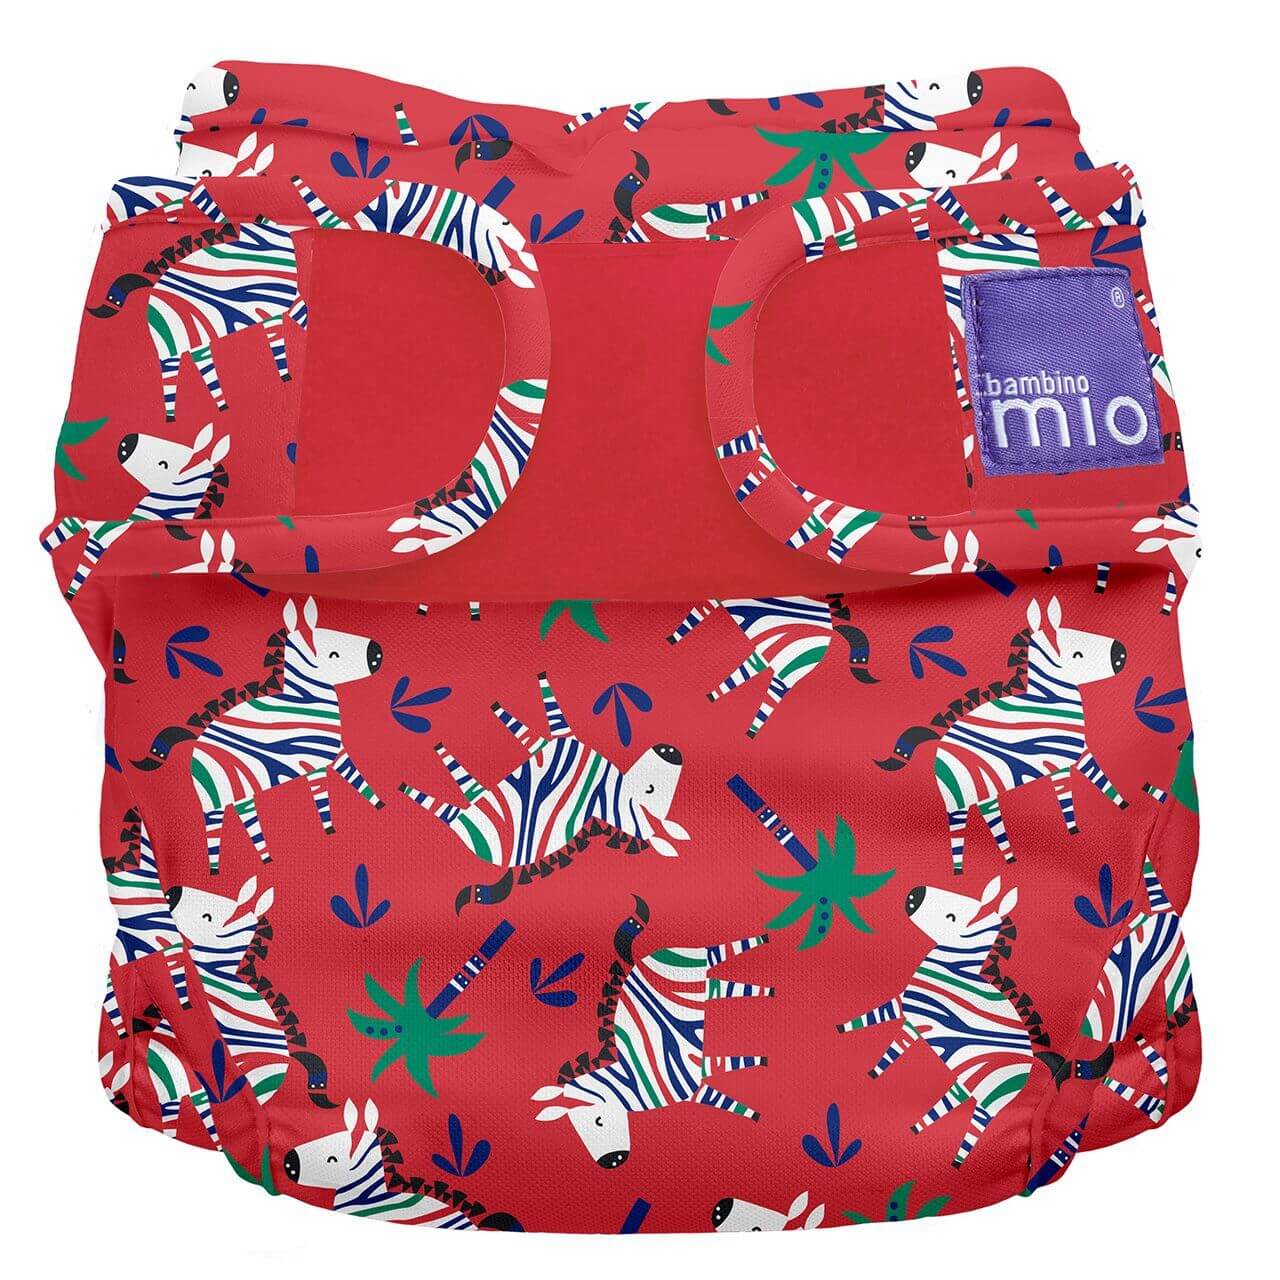 Bambino Mio Mioduo Reusable Nappy Cover Size: Size 1 Colour: Zebra Dazzle reusable nappies nappy covers Earthlets